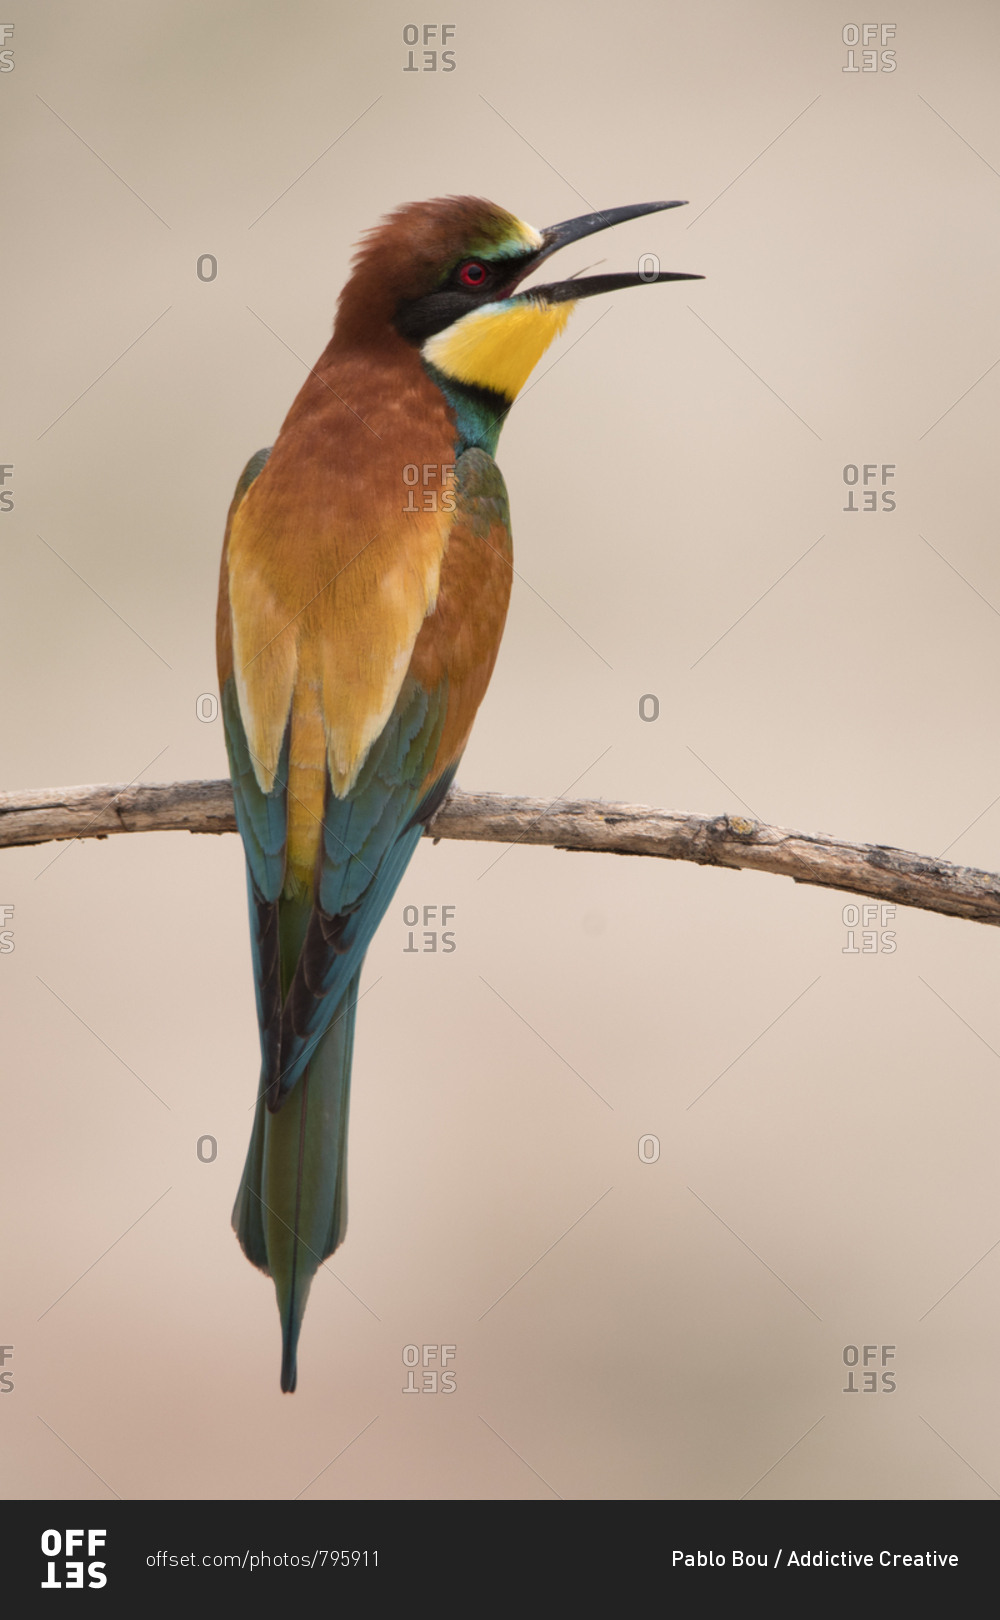 Bird standing on tree branch